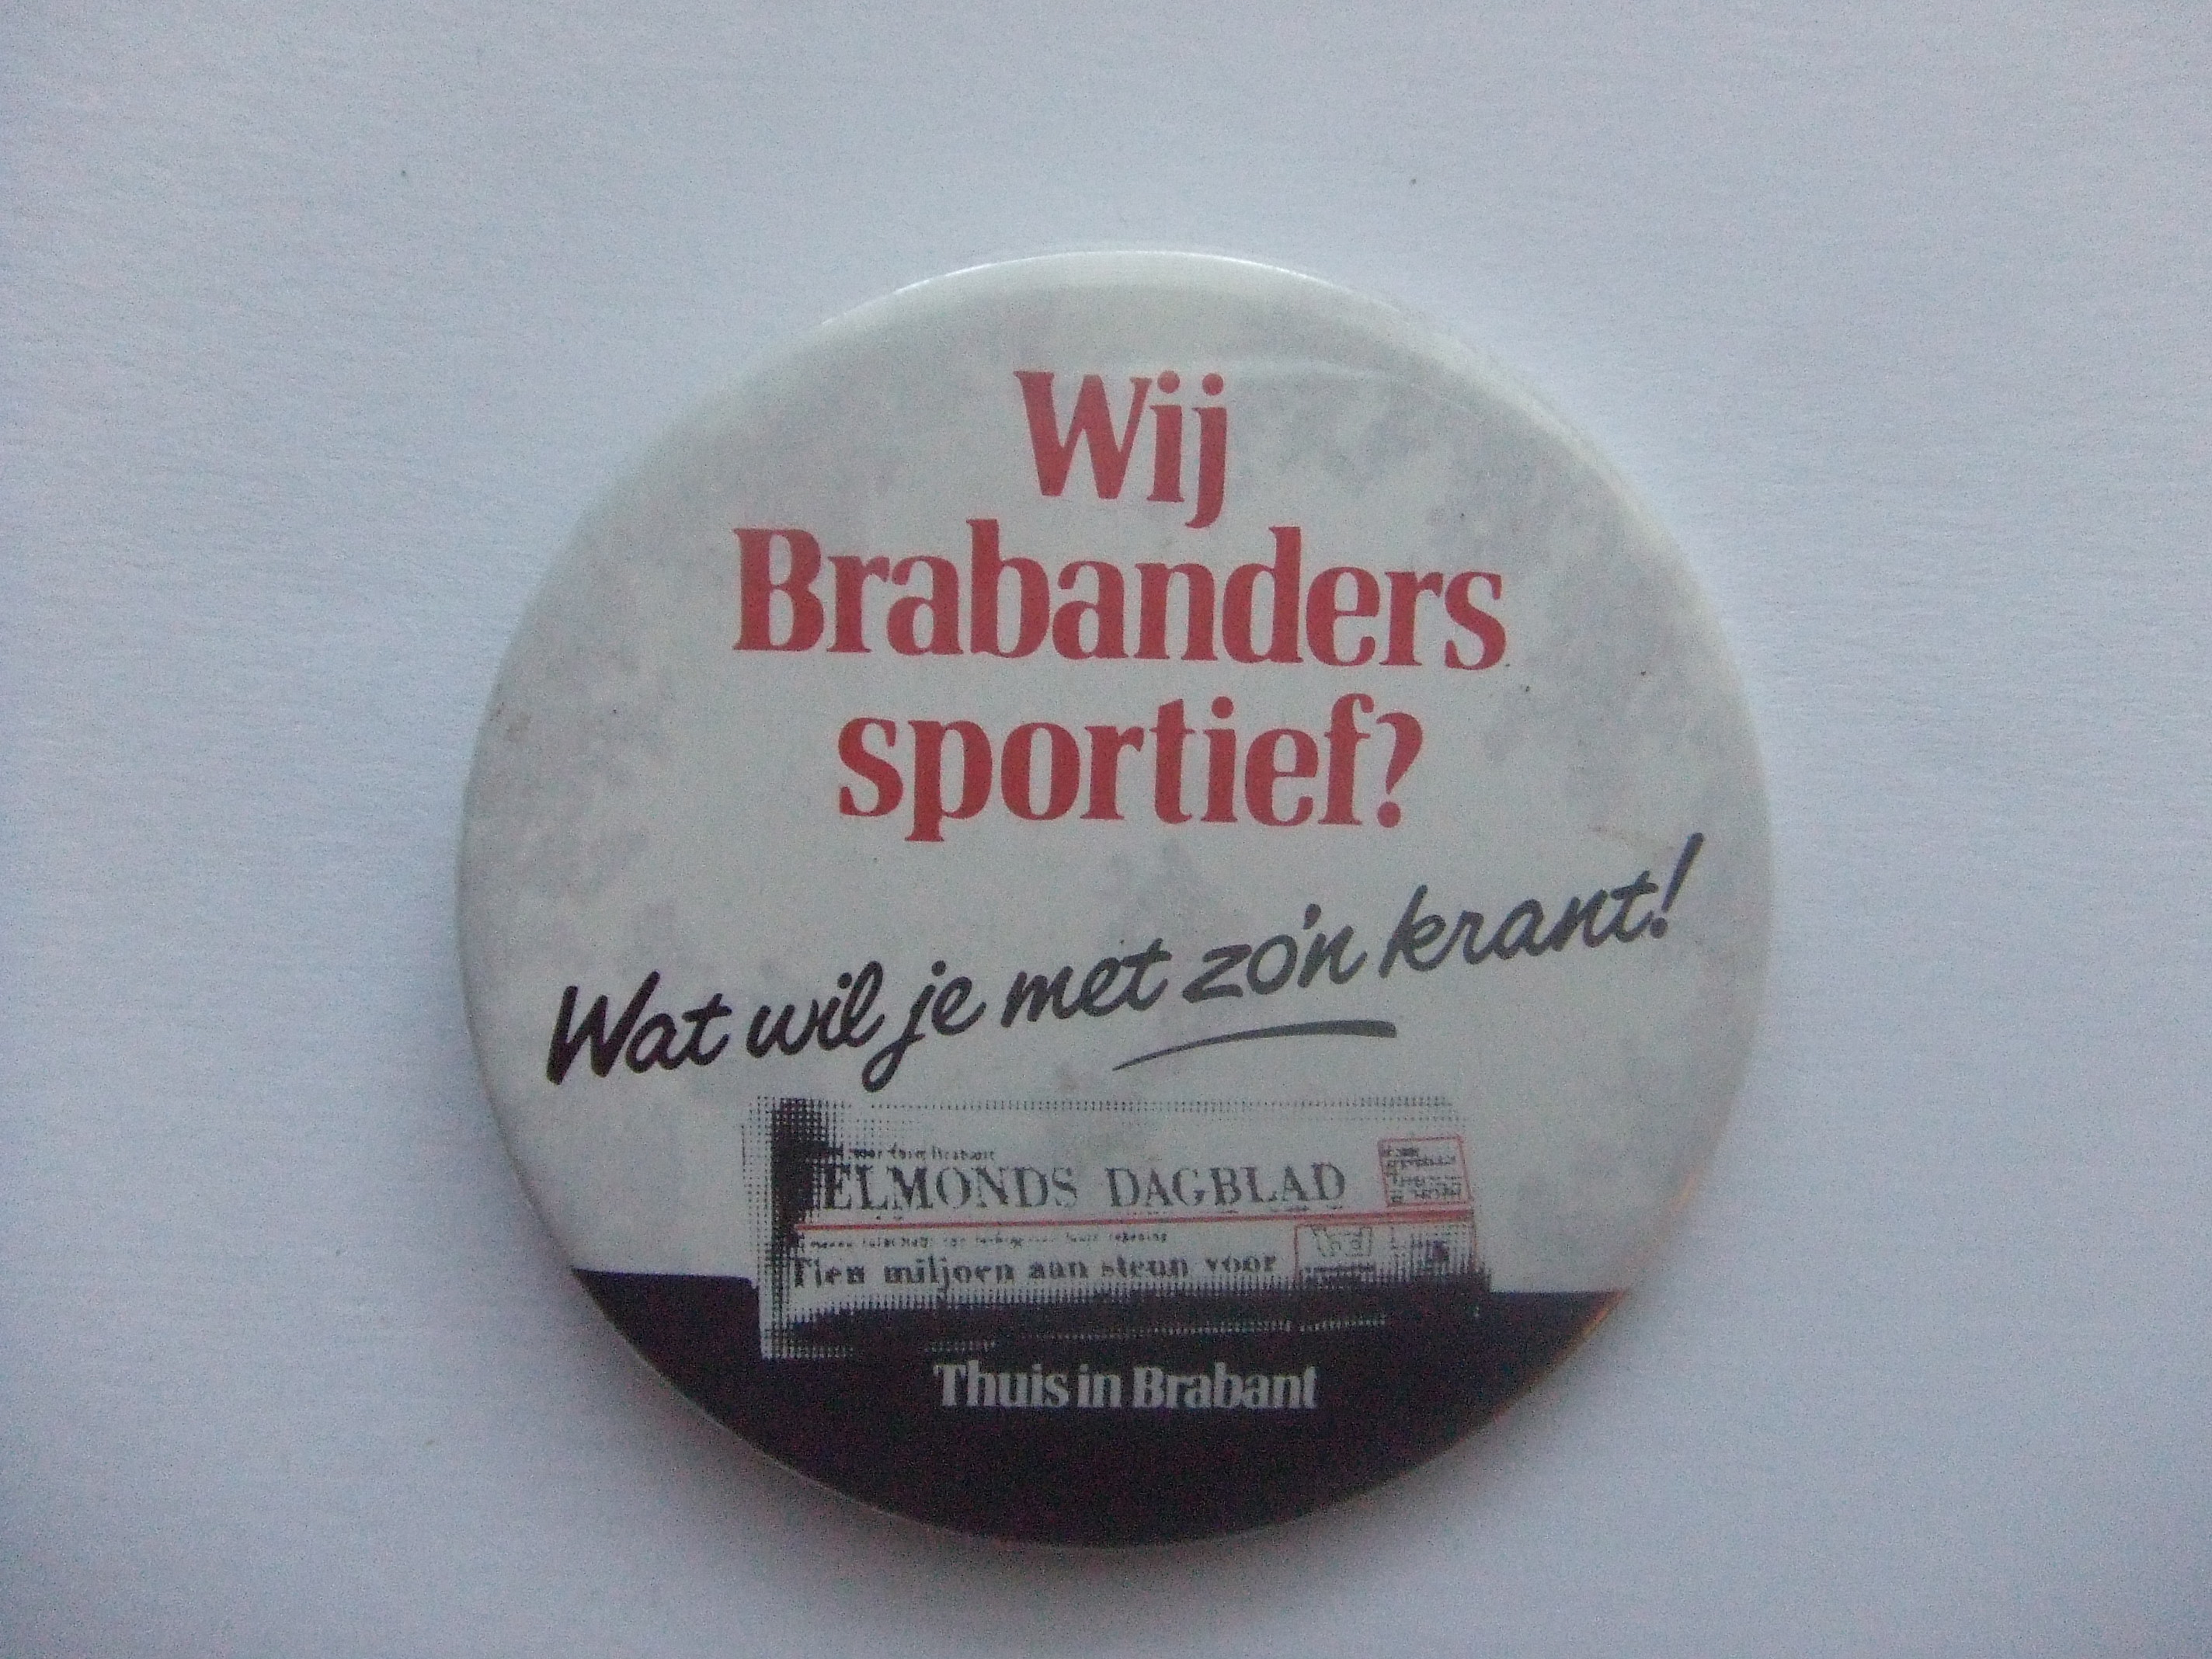 Helmonds dagblad Brabant sportief